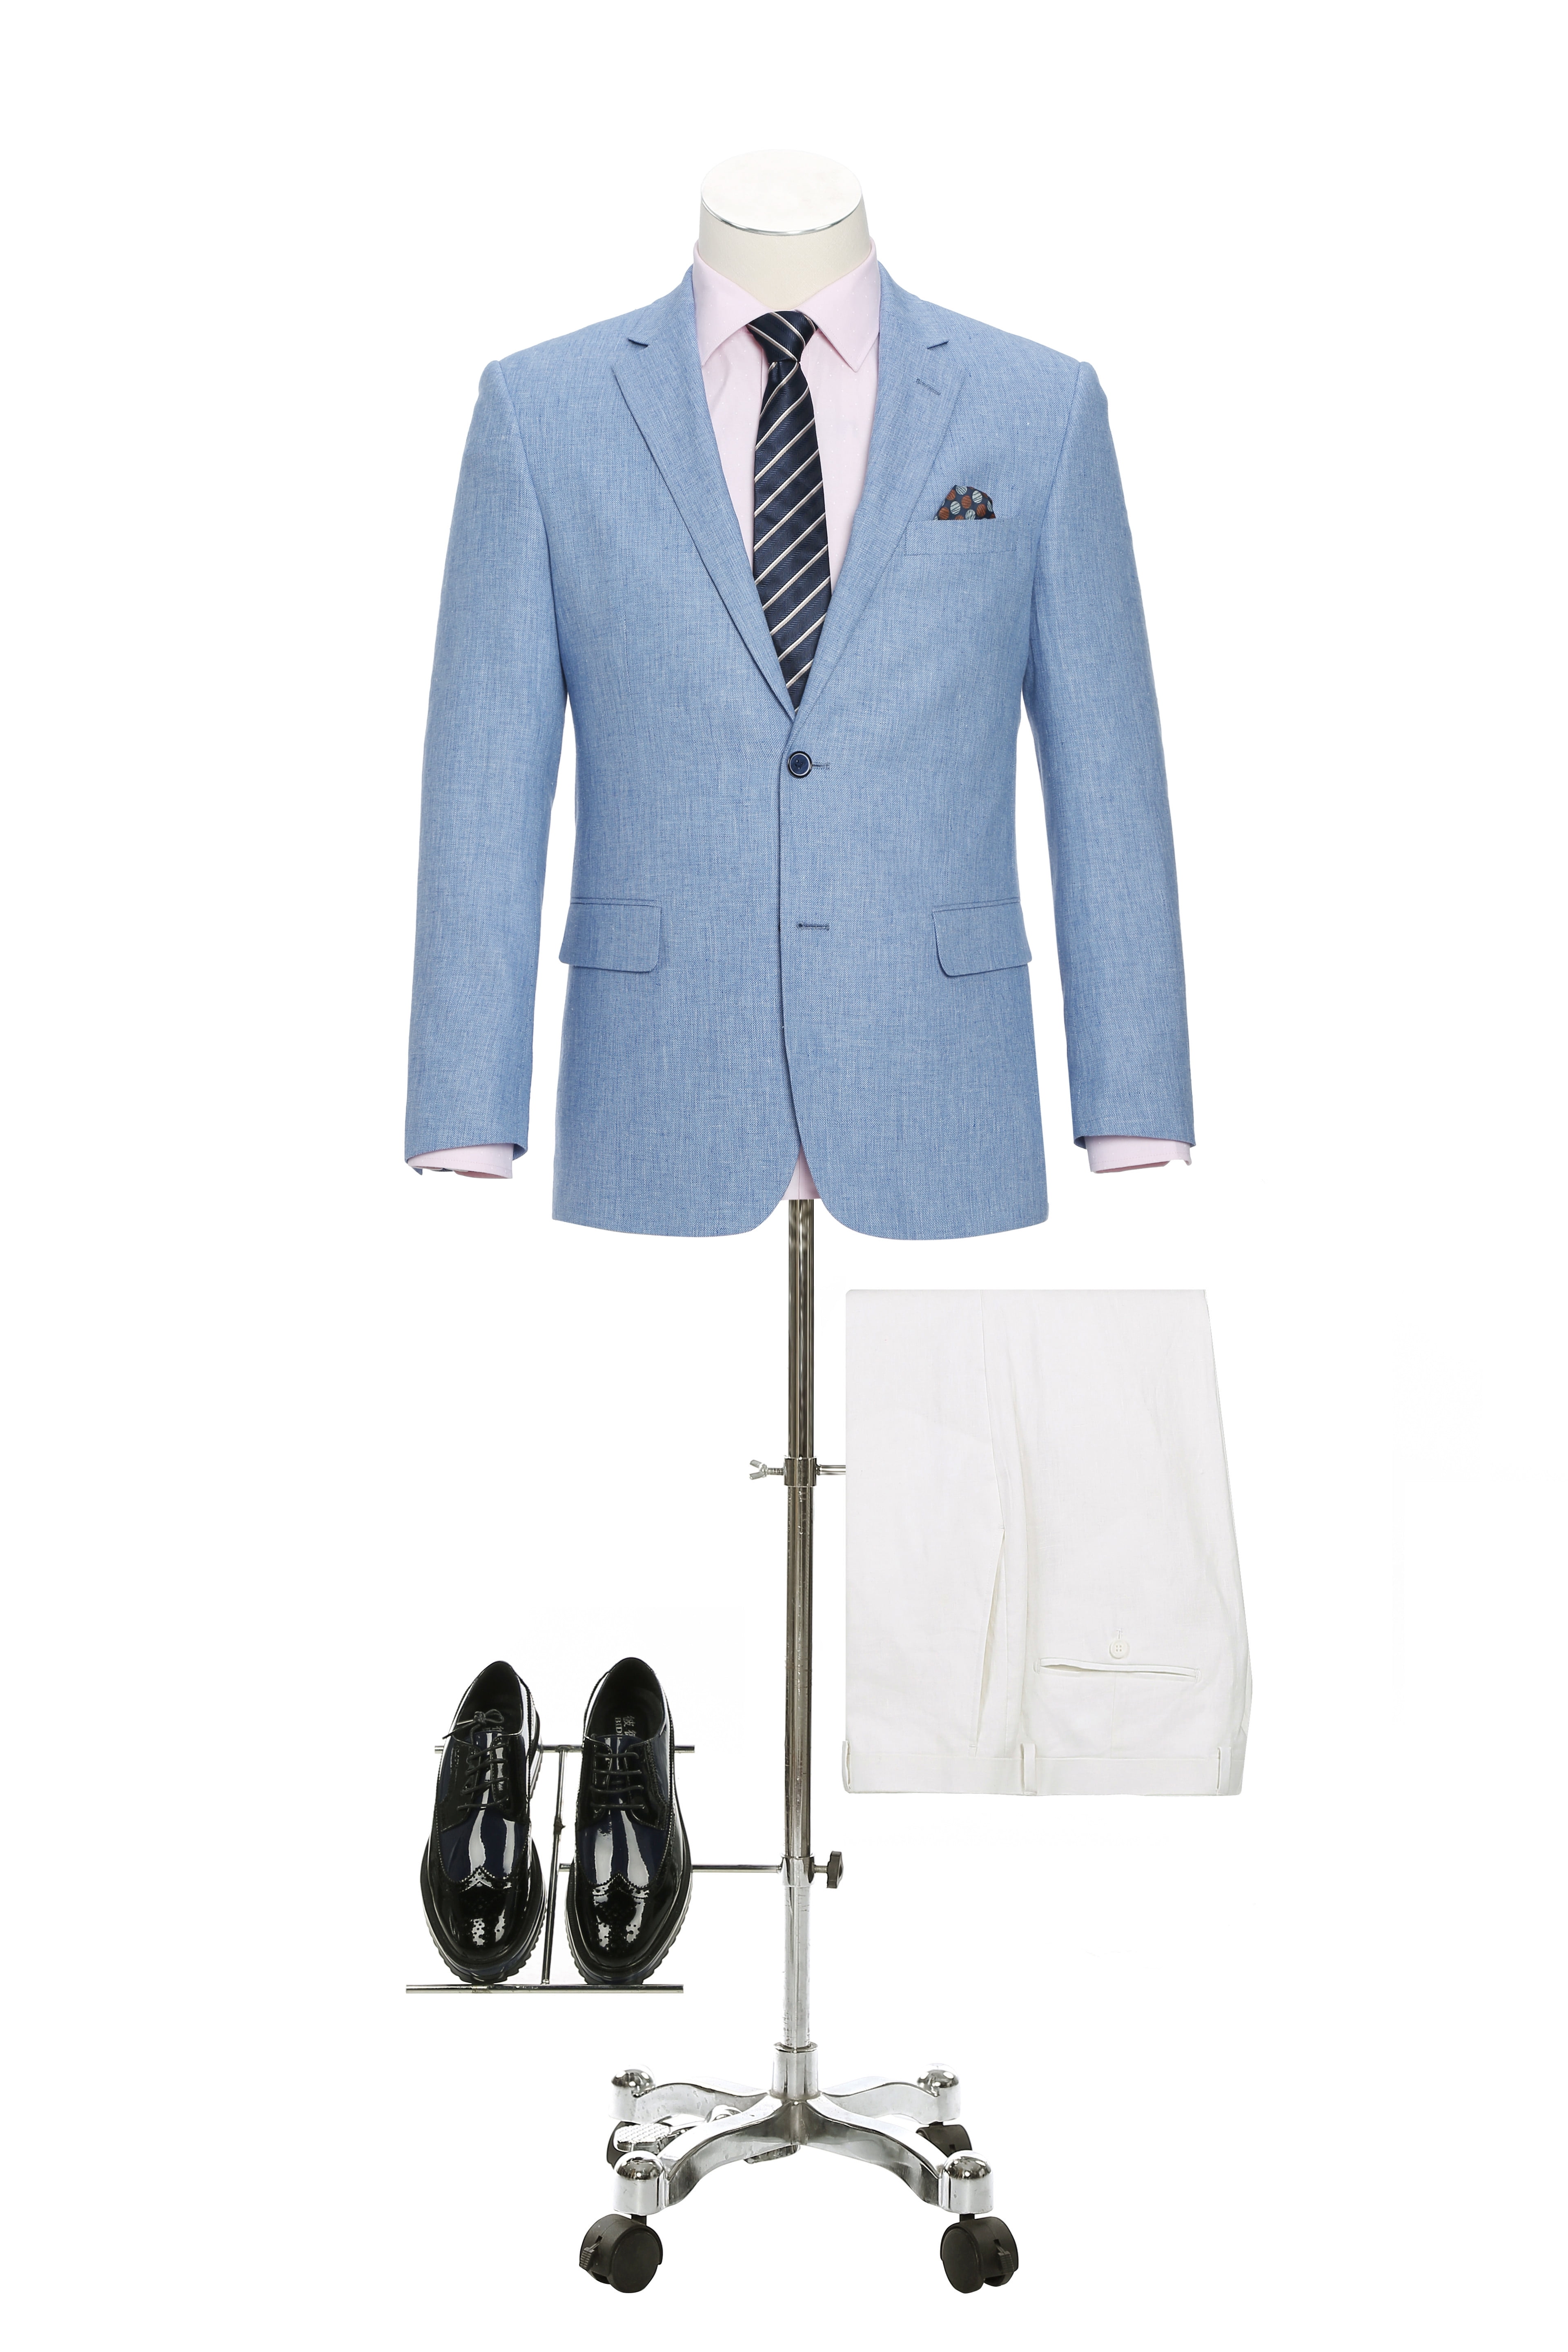 610-2 Men's Classic Fit Blazer Summer Linen Cotton Sport Coat